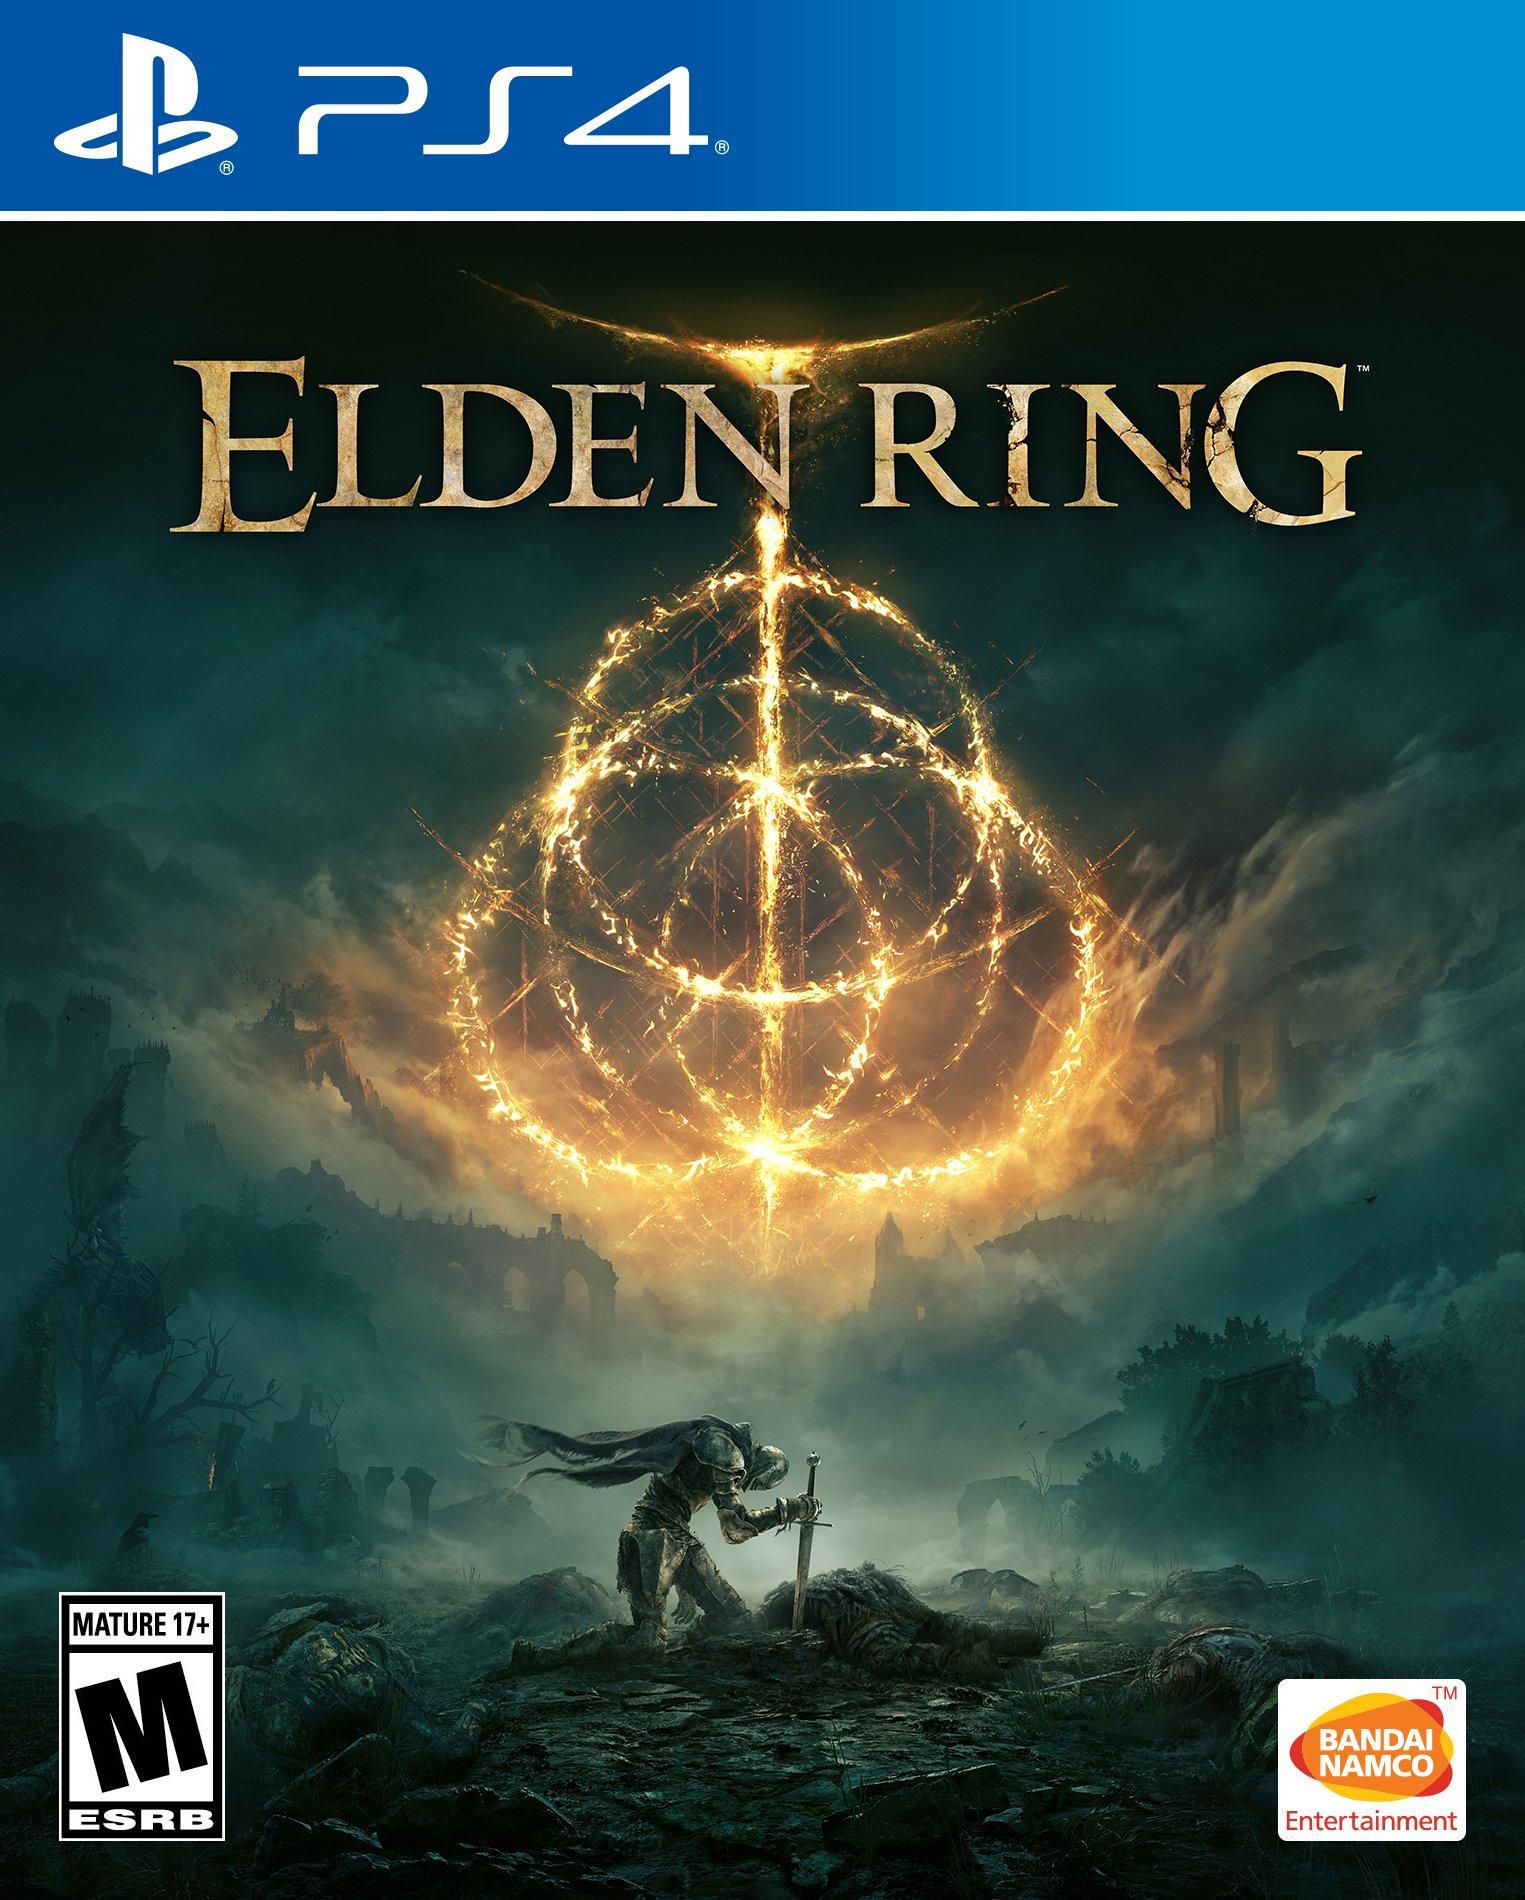 PlayStation Stars recebe campanha de Elden Ring; veja figura do nível 5  recentemente descoberto - PSX Brasil